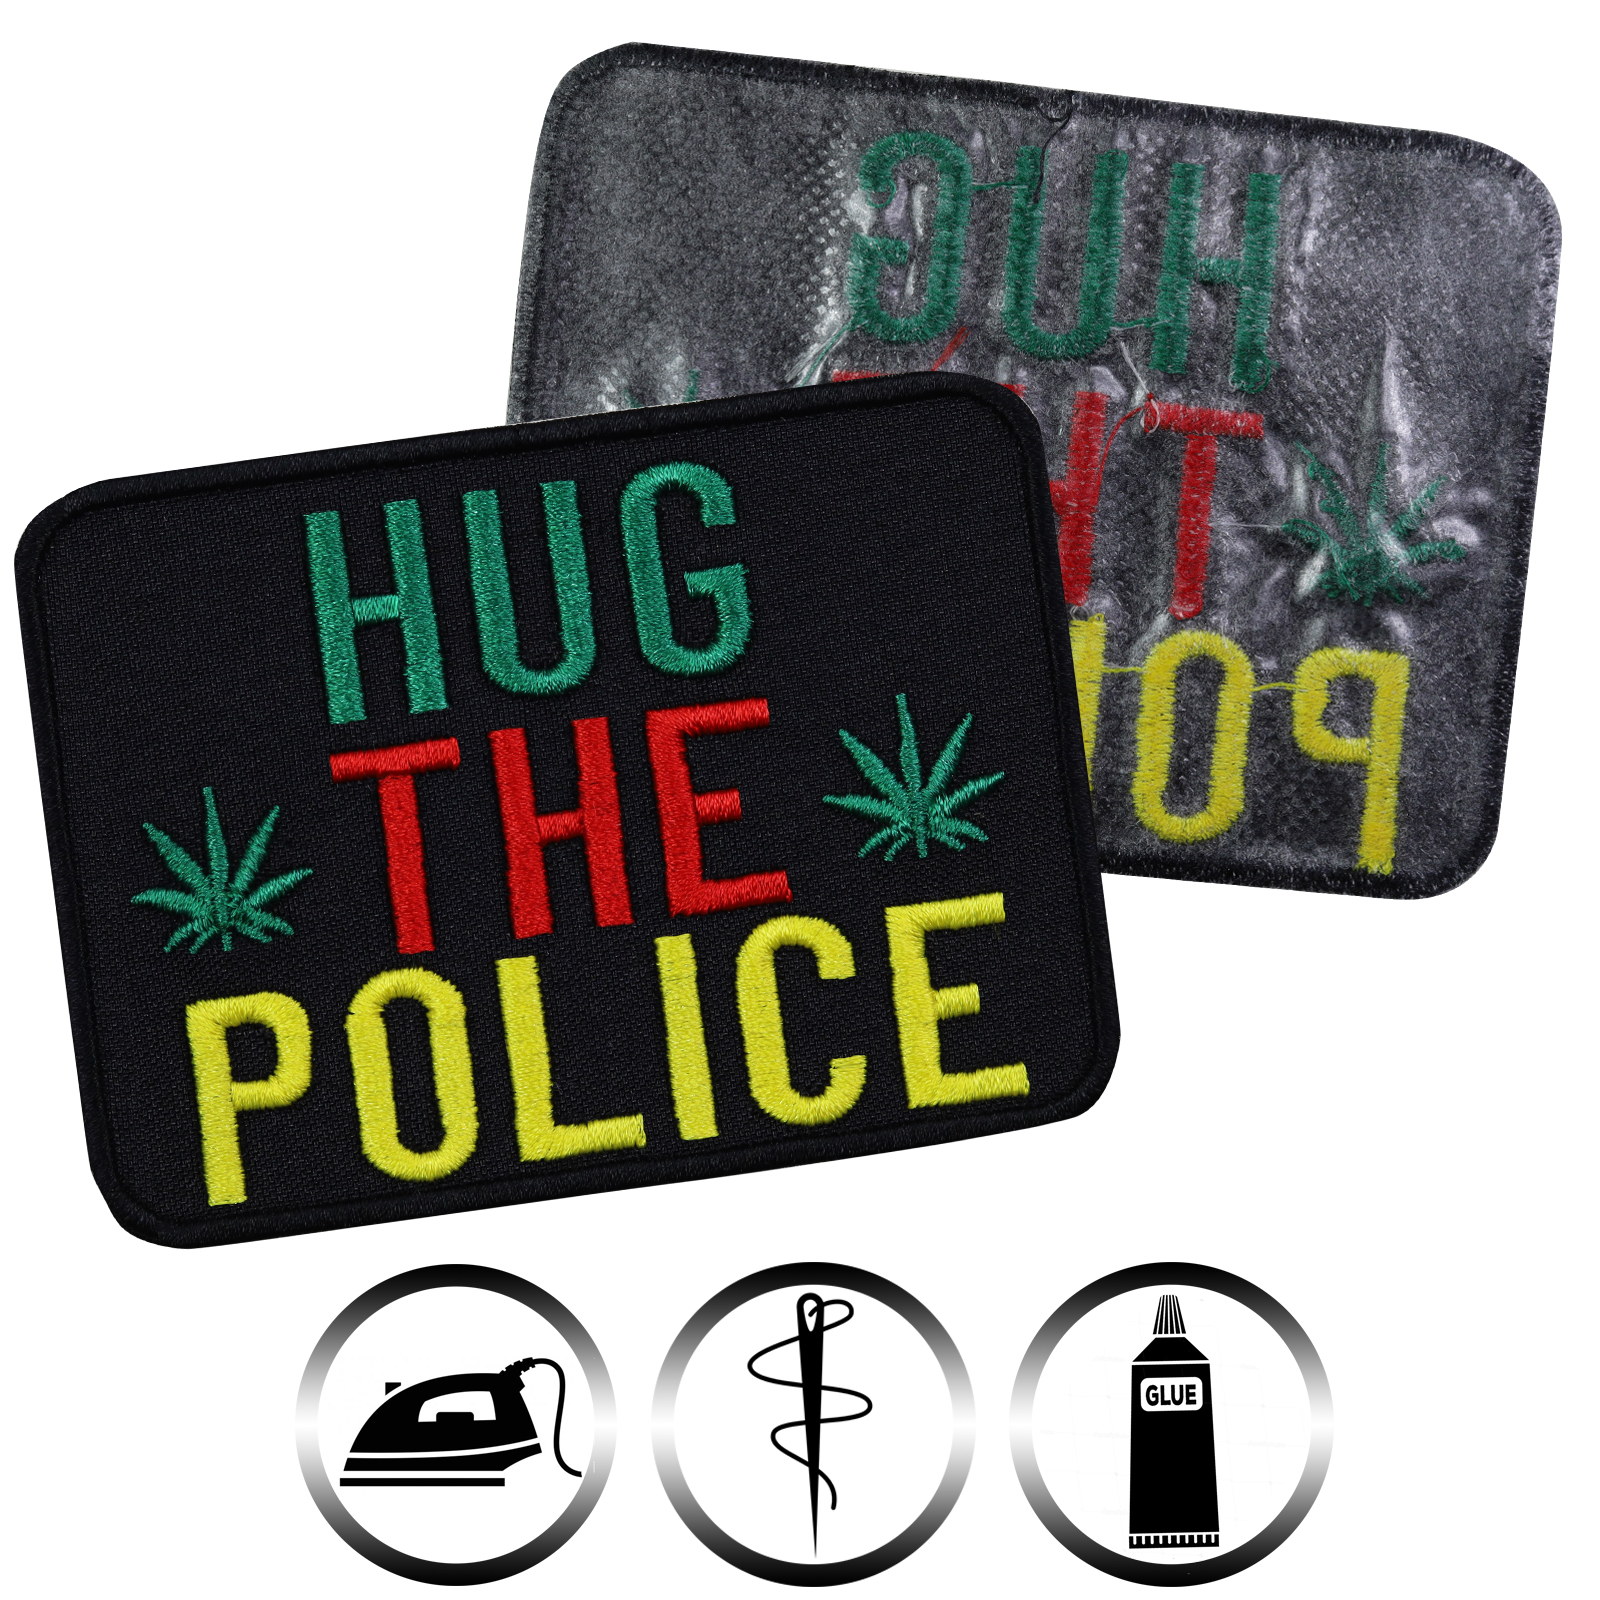 Hug the police - Patch